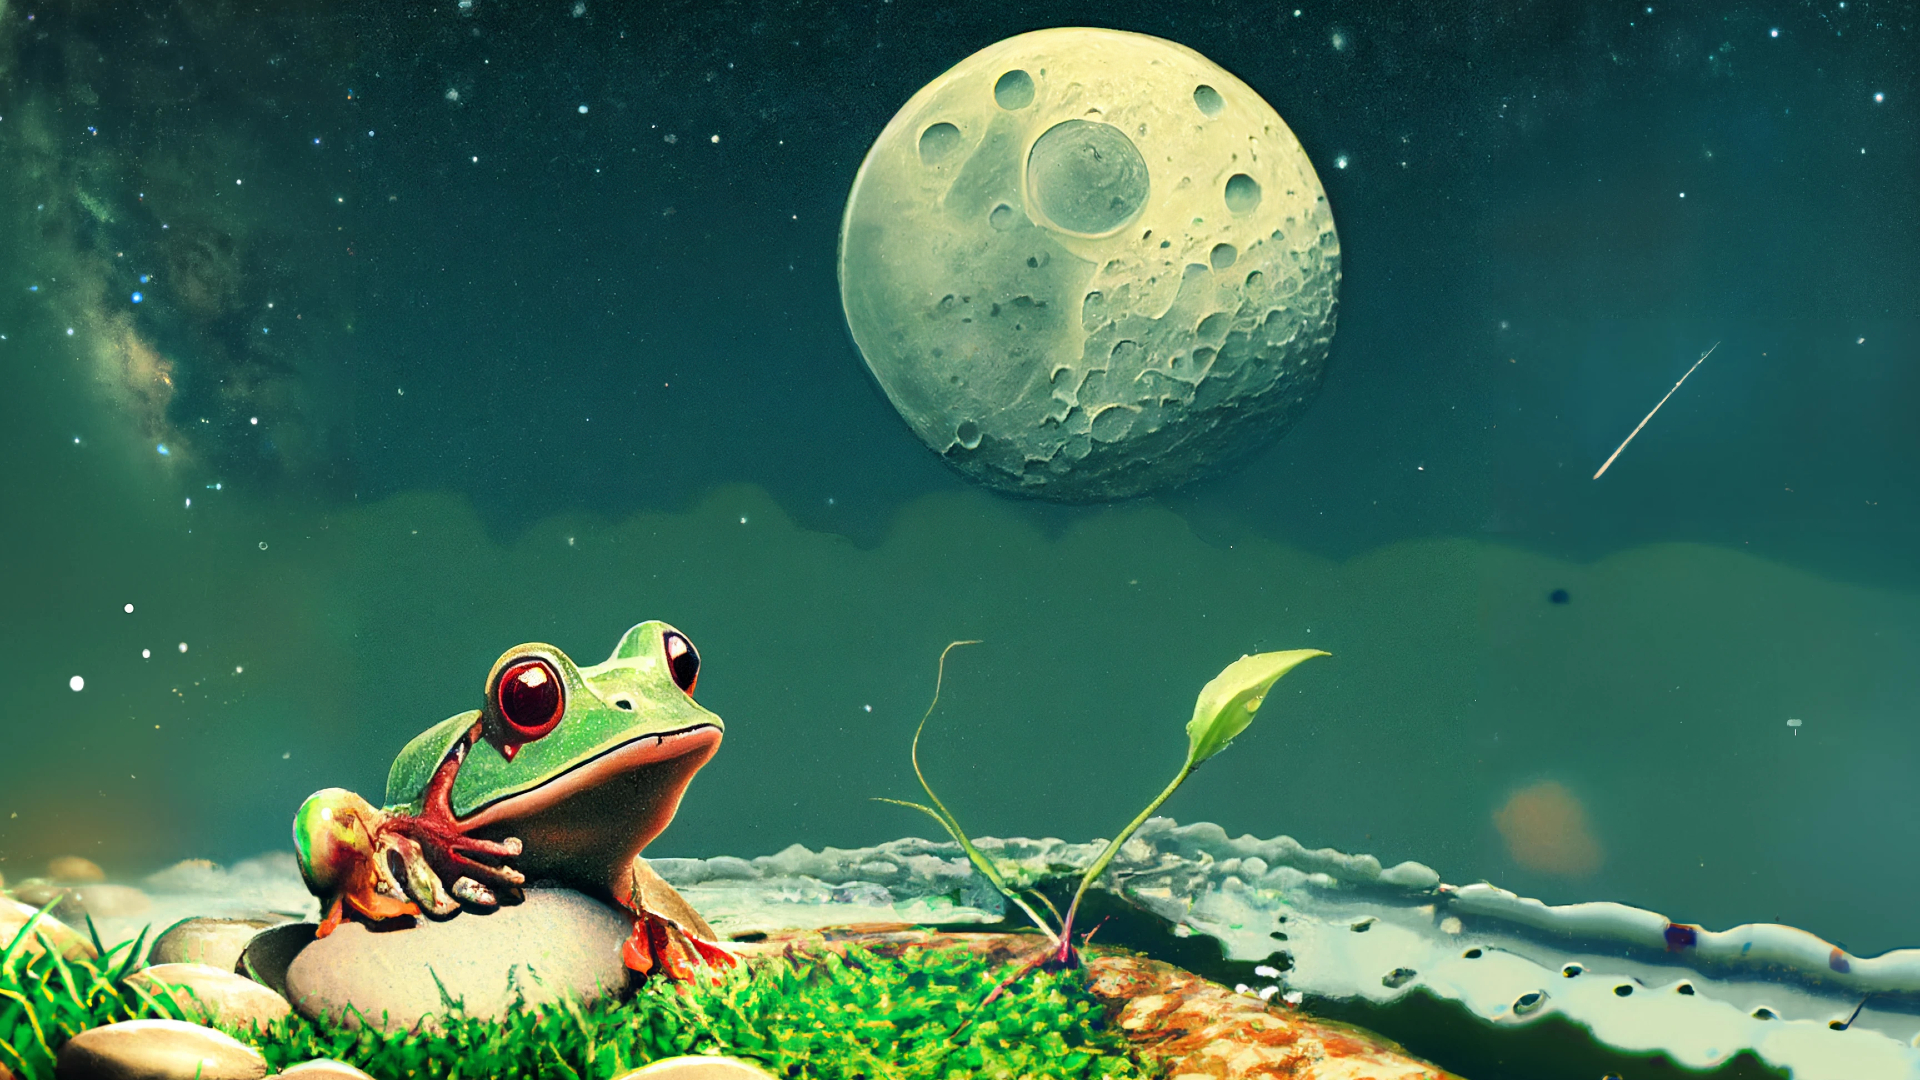 Cool Frog HD Landscape Digital Art Wallpaper